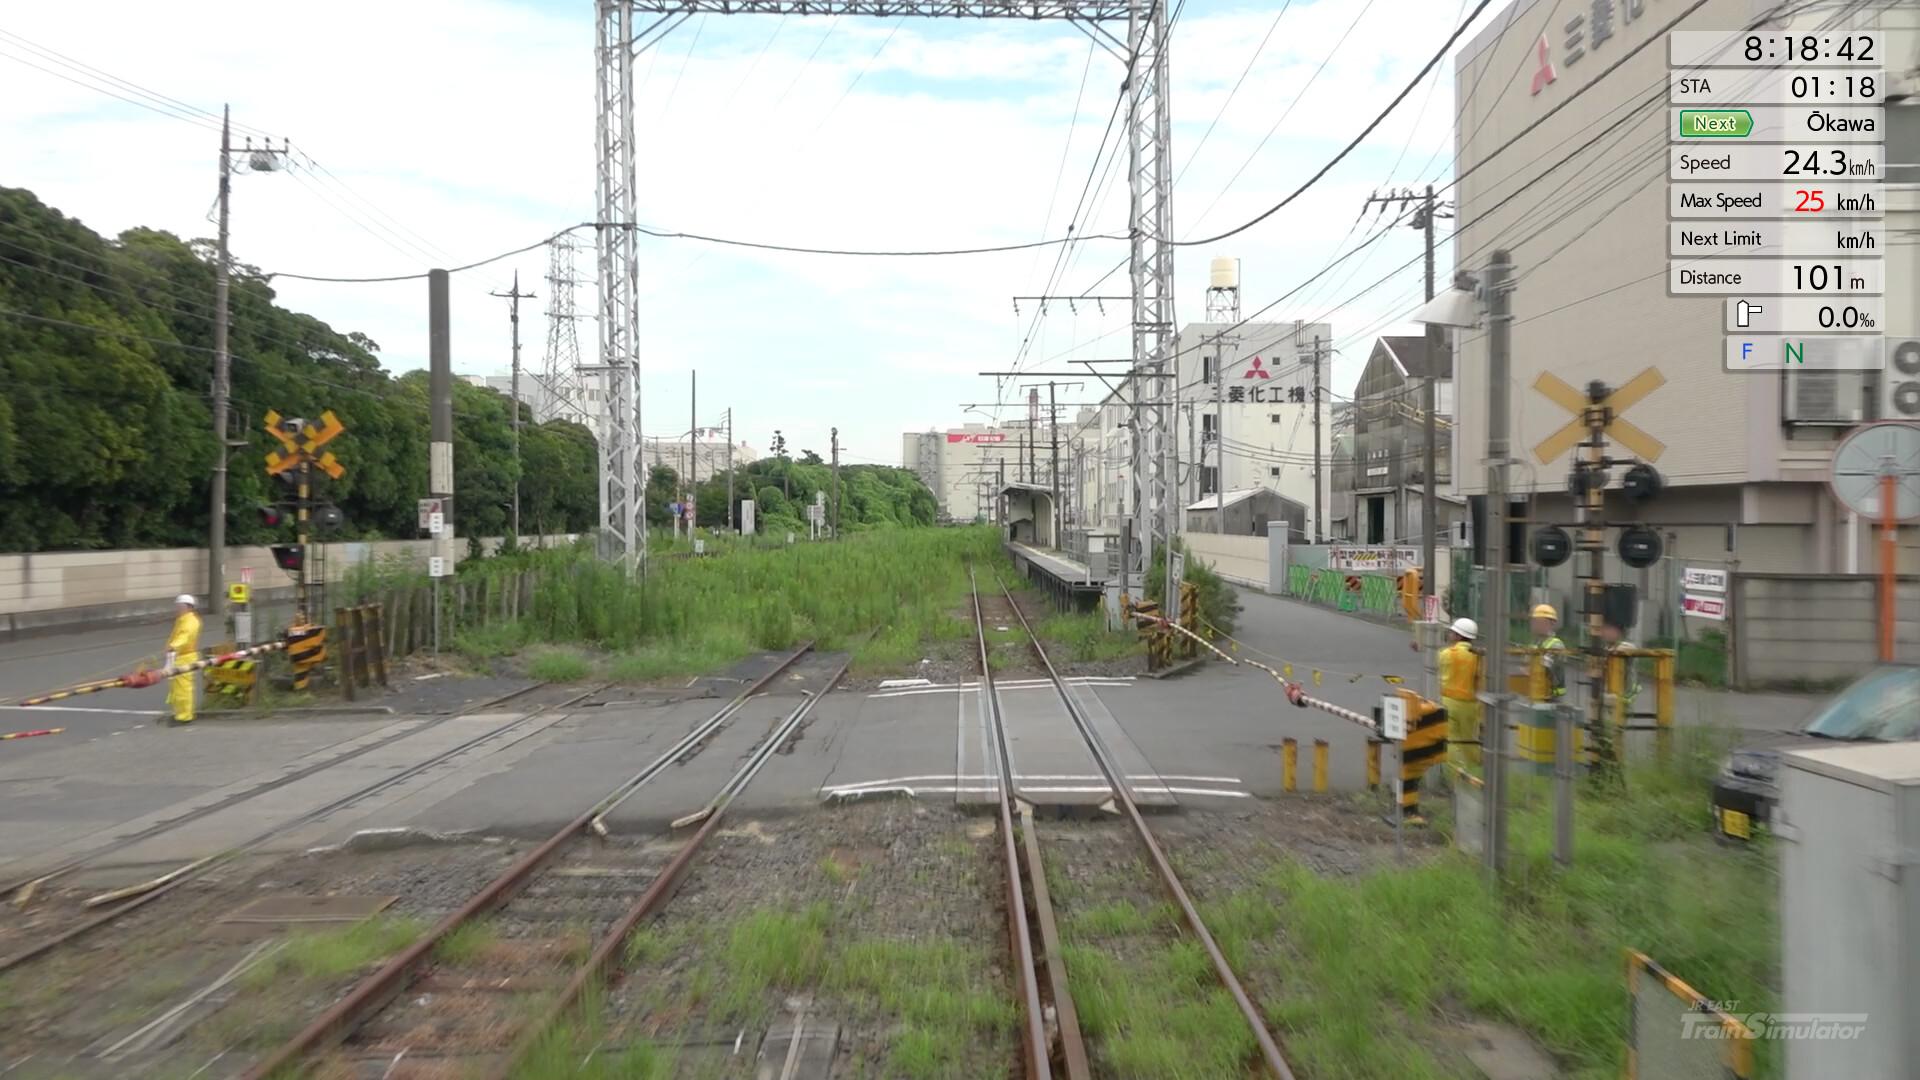 JR EAST Train Simulator: Nambu Line (Kawasaki to Tachikawa) E233-8000 series Nambu Branchi Line (Hamakawasaki to Shitte) 205-1000 series Tsurumi Line (Tsurumi to Ogimachi,Okawa,Umi-Shibaura) 205-1100 series